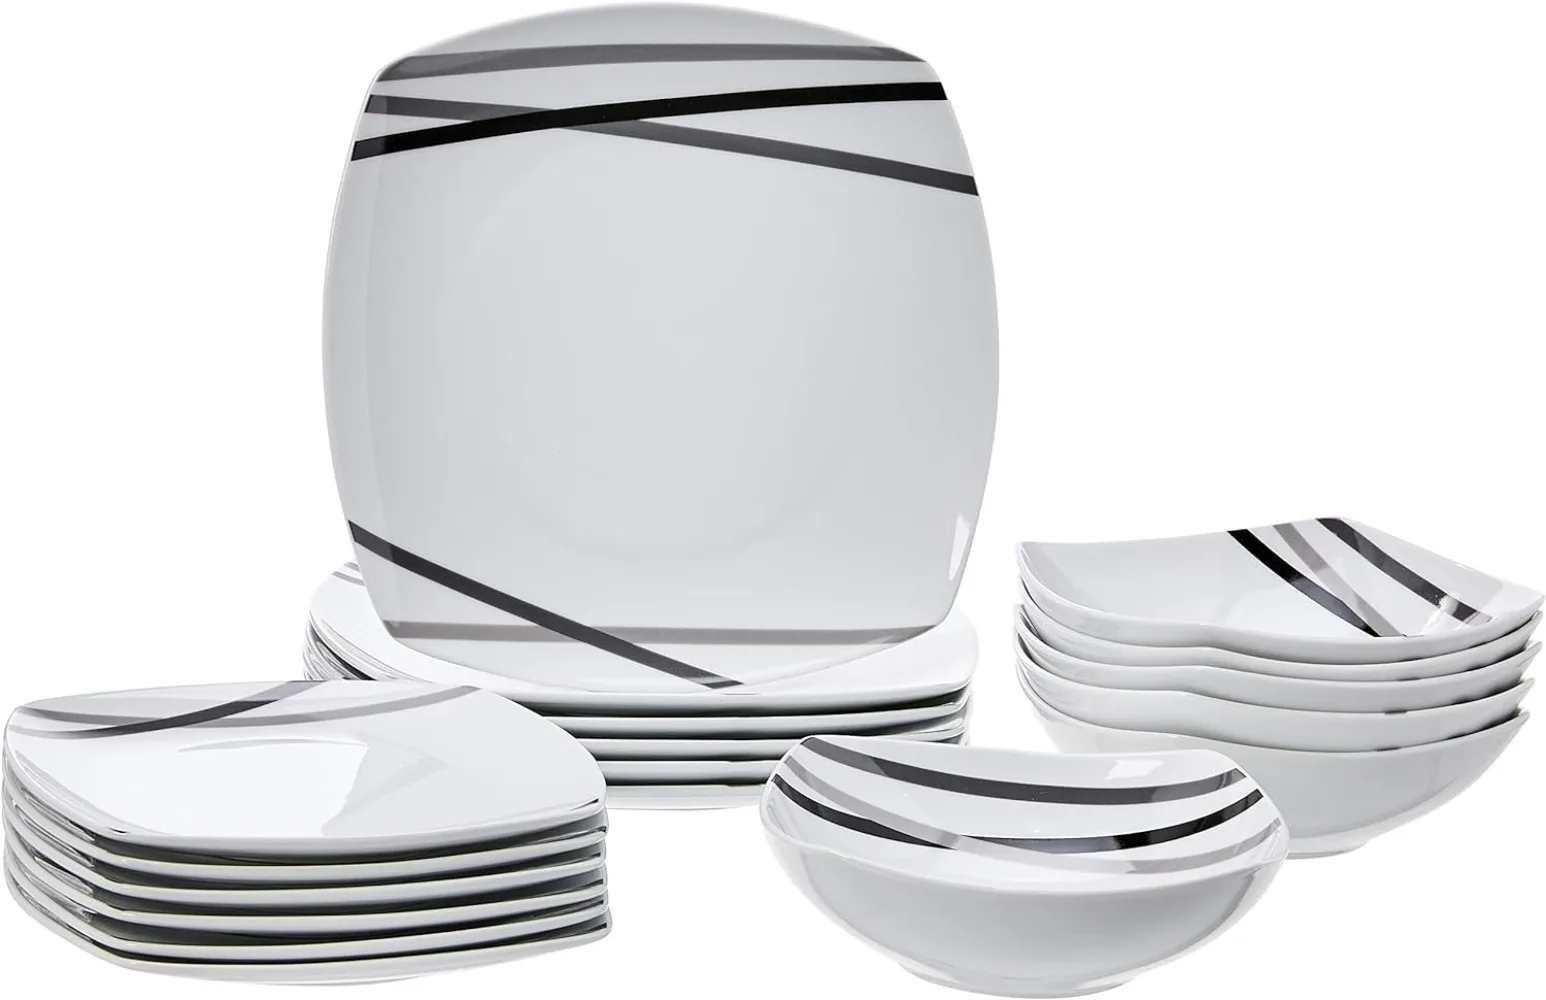 

- 18 Piece Kitchen Dinnerware Set - Square Plates, Bowls, Service for 6